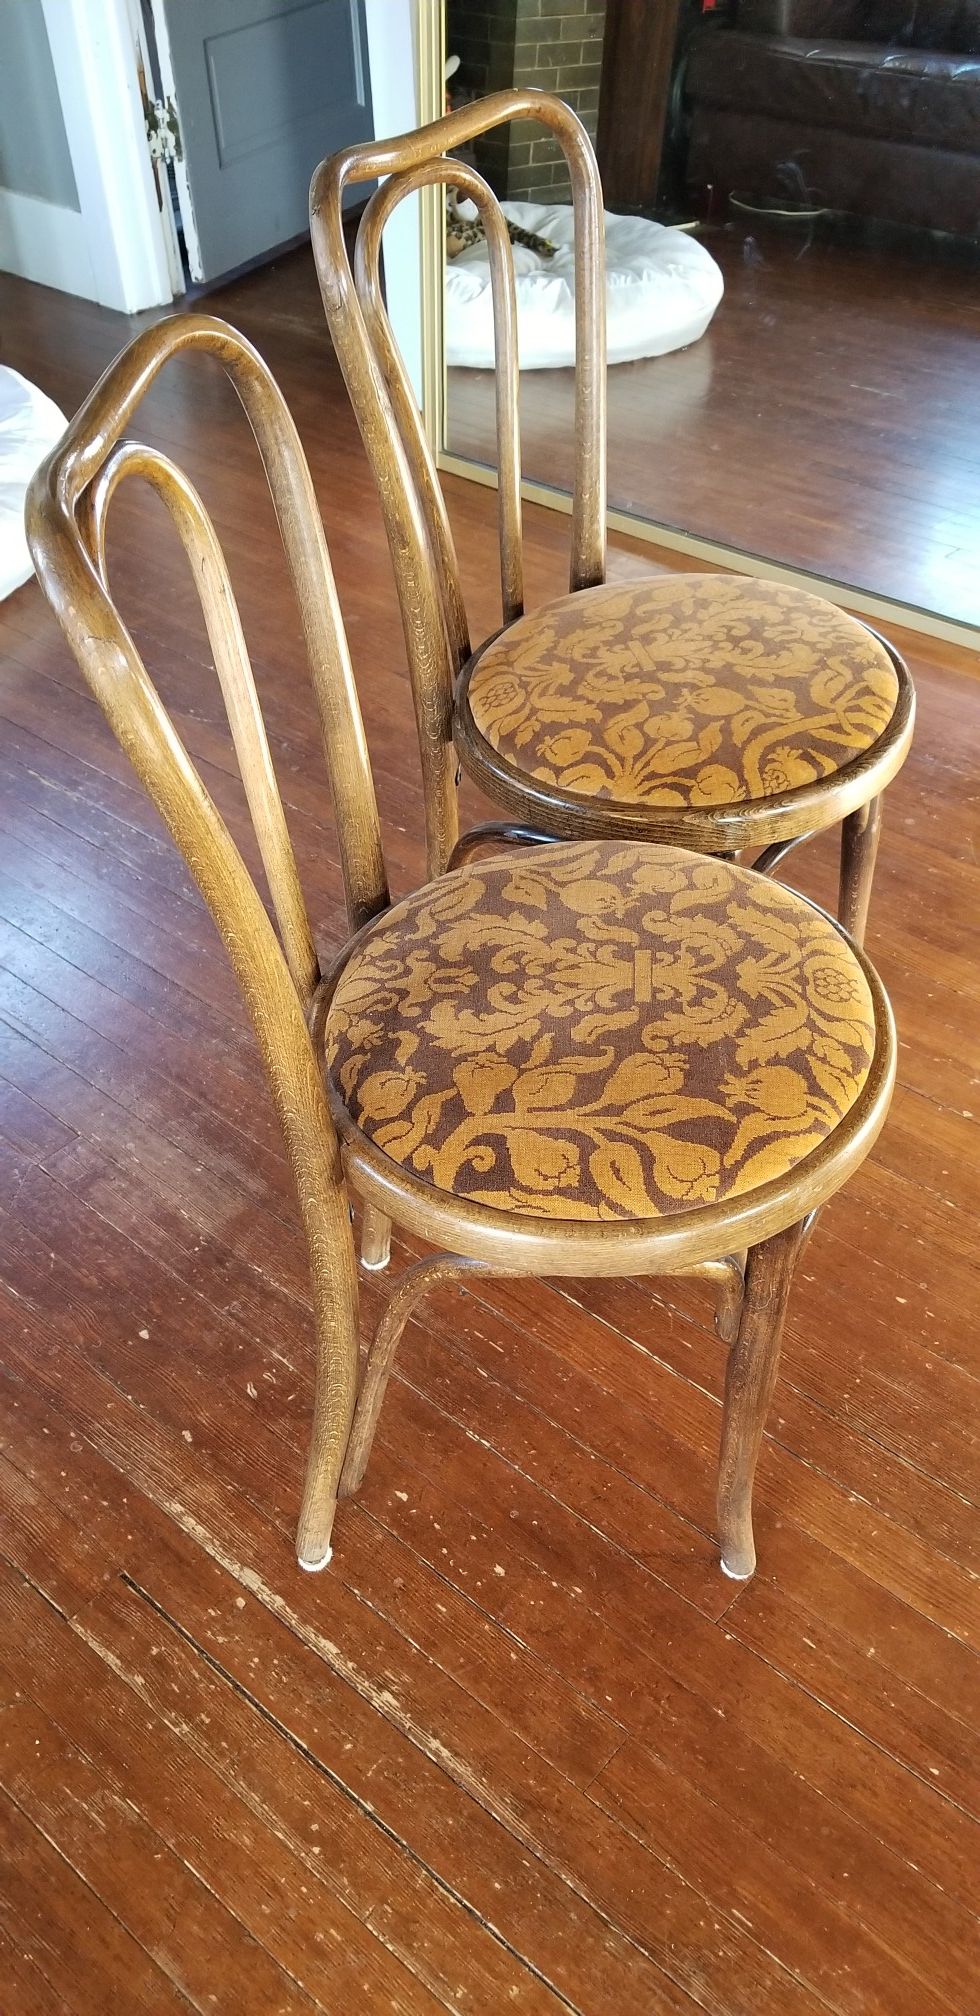 Vintage: 1900s Bentwood bistro chairs